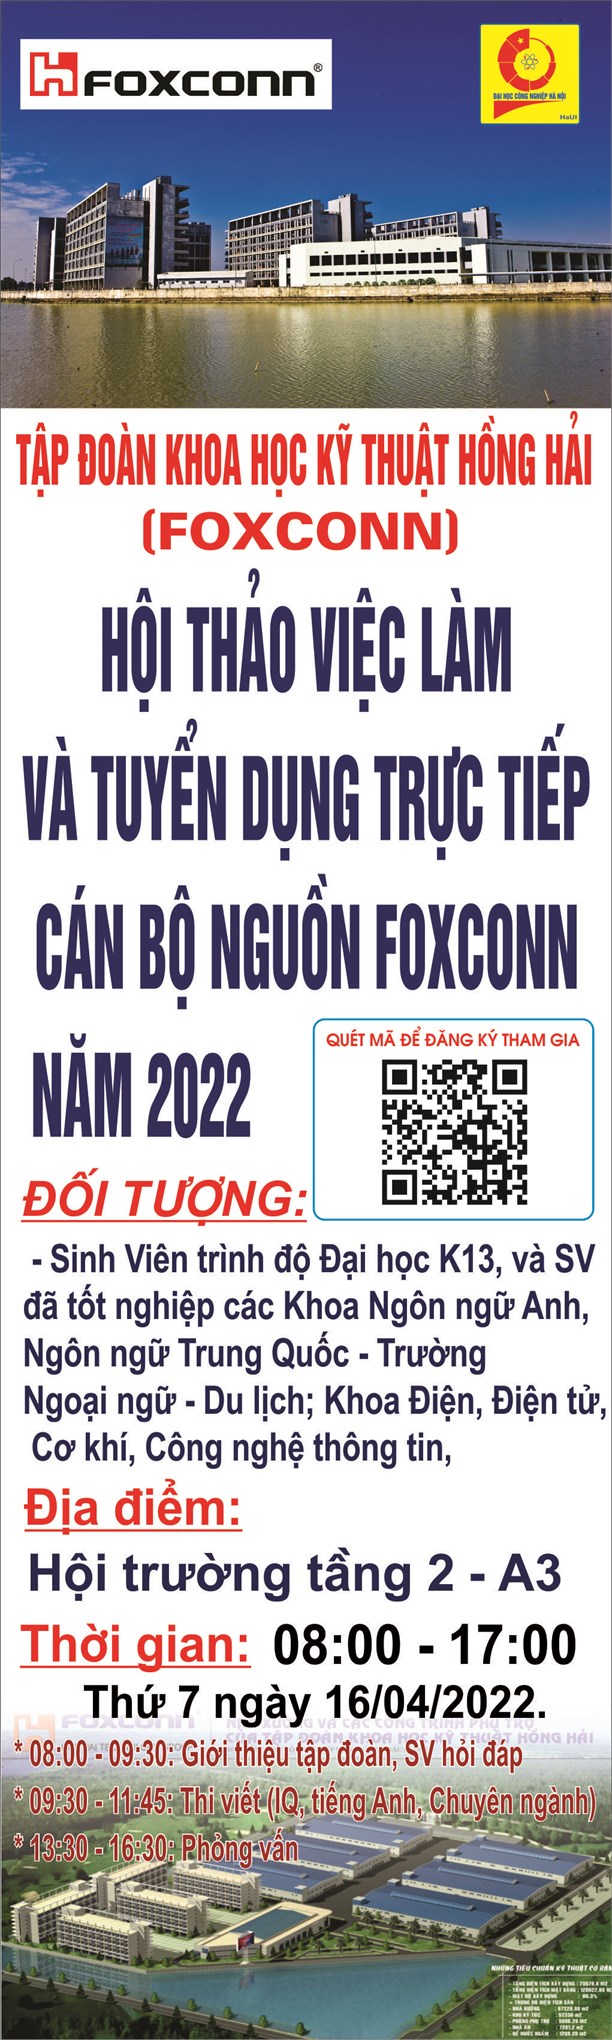 Job workshop of Hon Hai Technology Group (Foxconn)